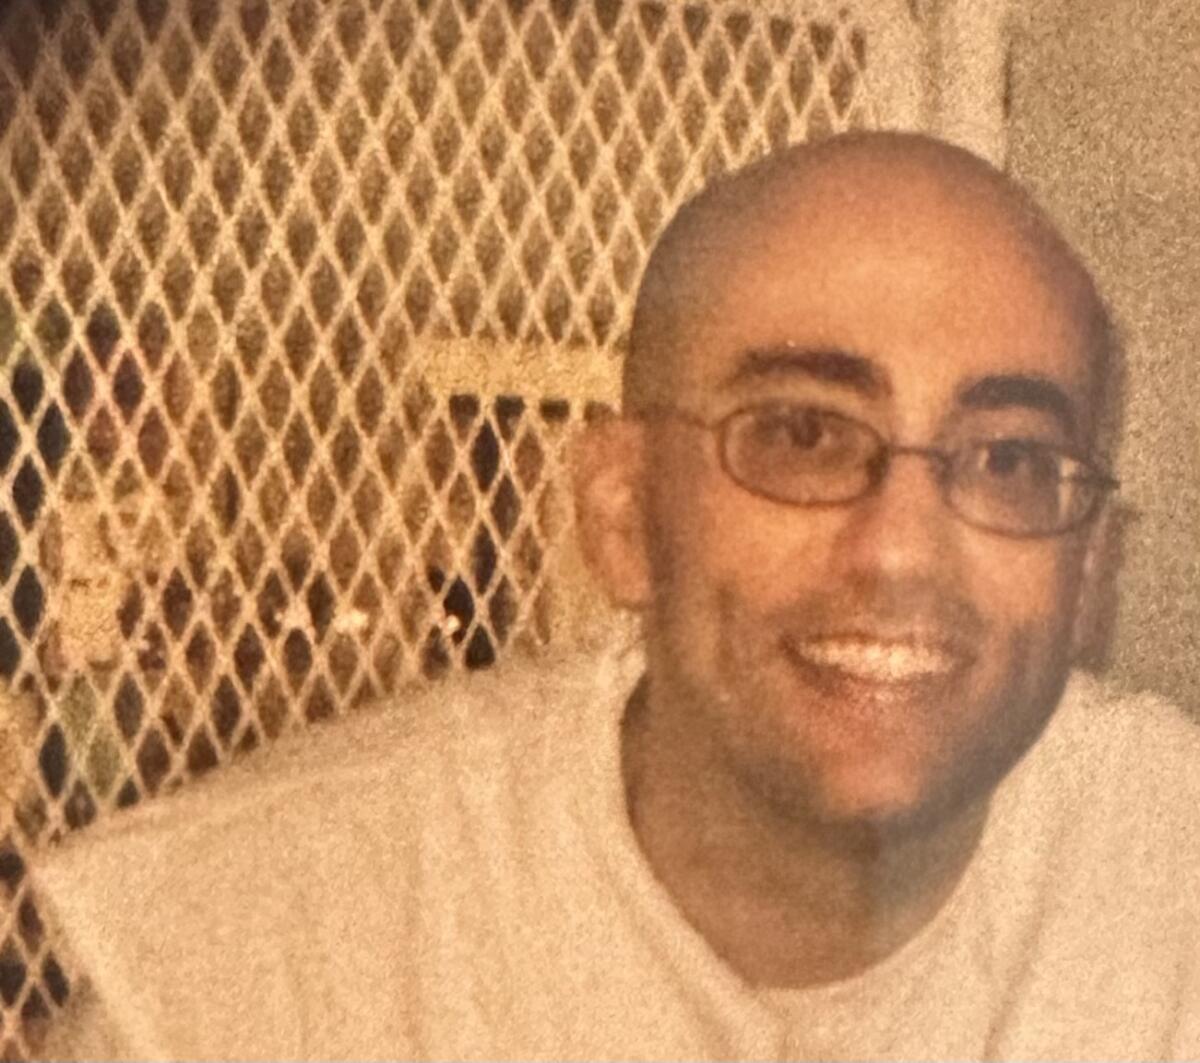 Closeup of a smiling bald man wearing glasses.